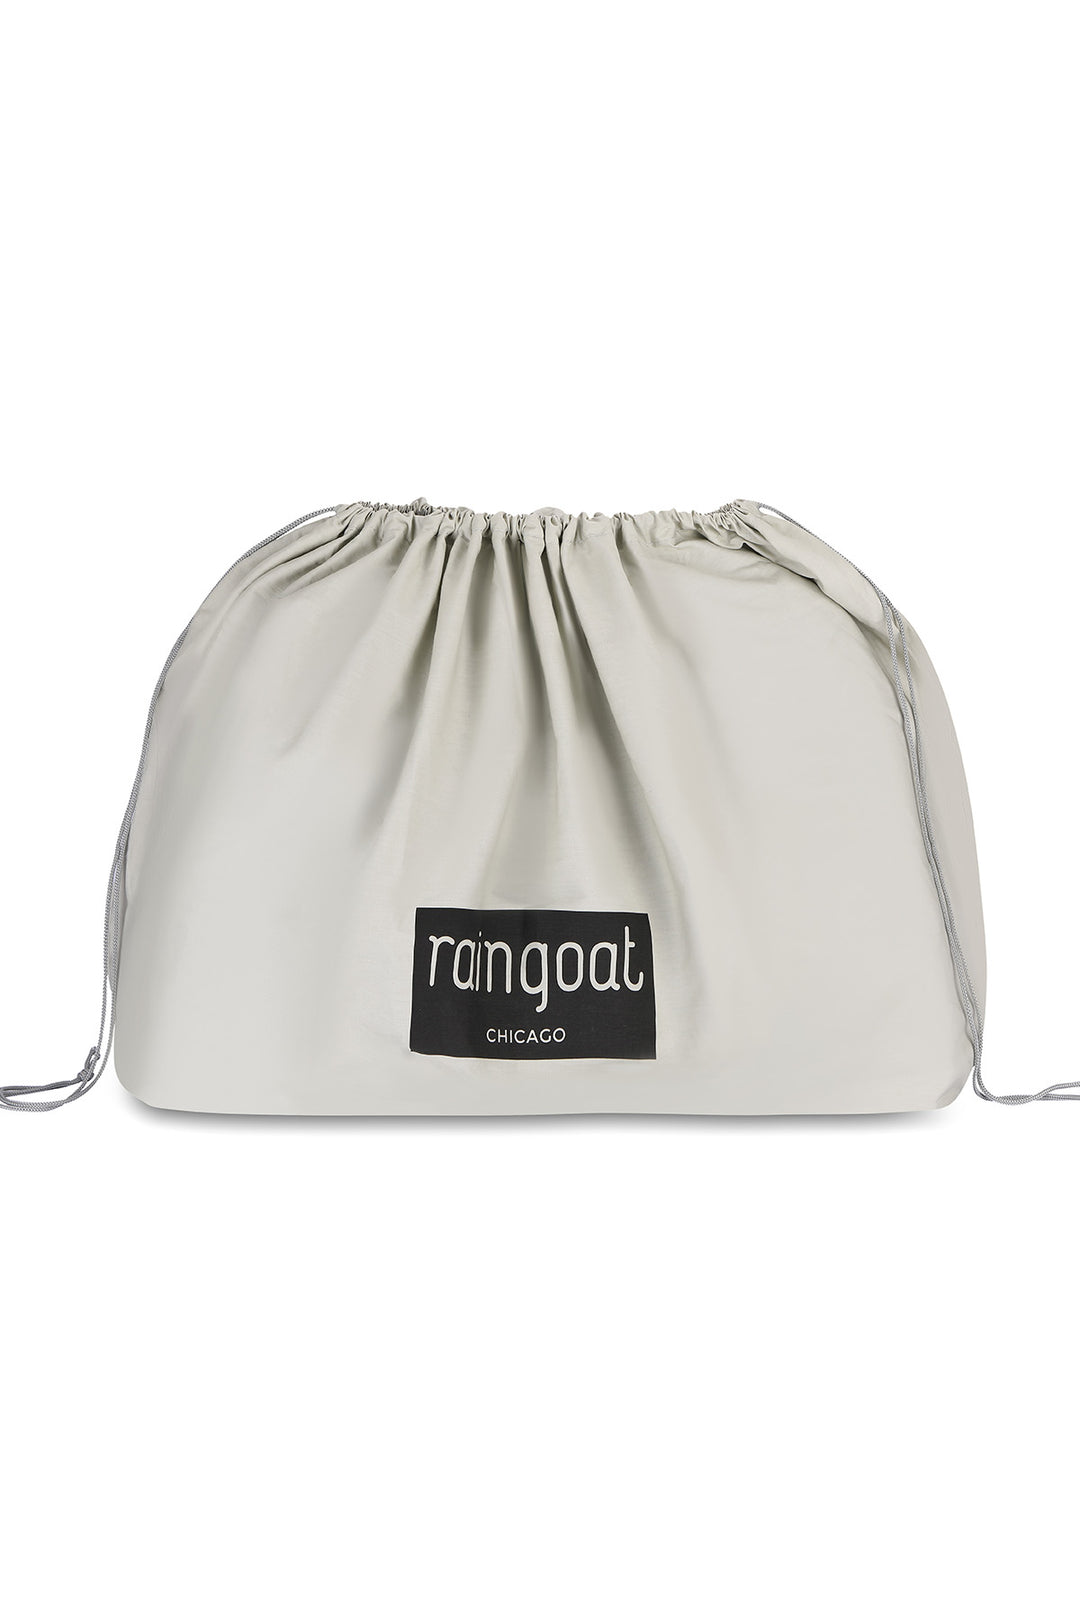 WP 1000 42L Waterproof Duffle Bag